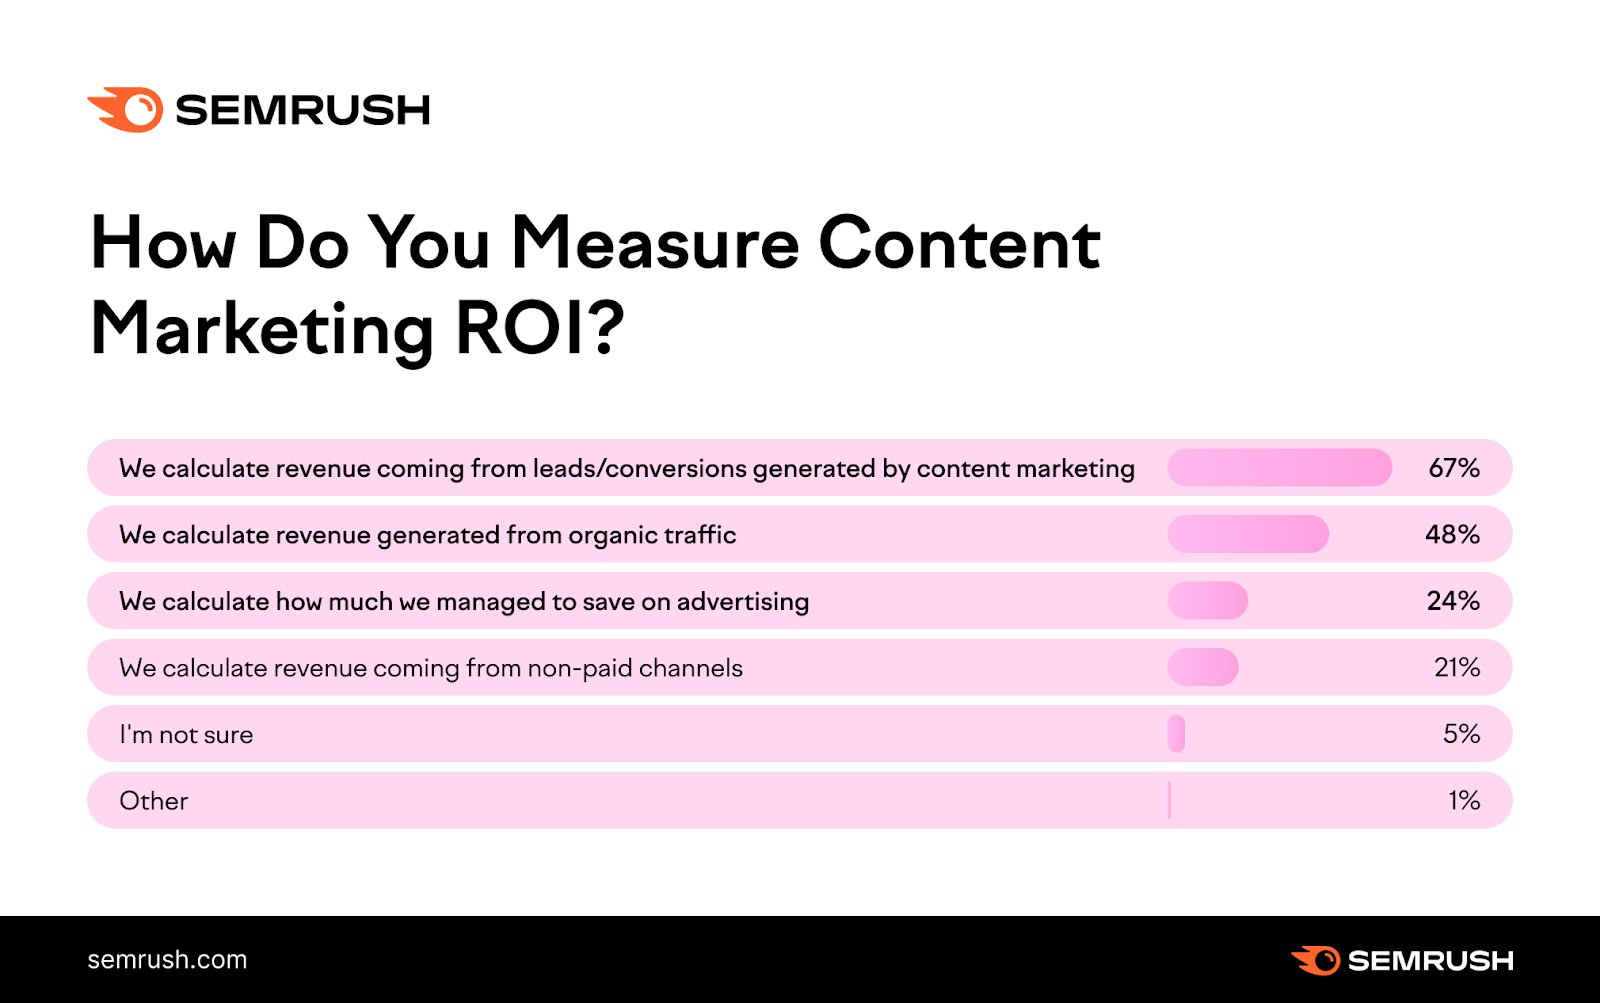 Methods for measuring content marketing ROI